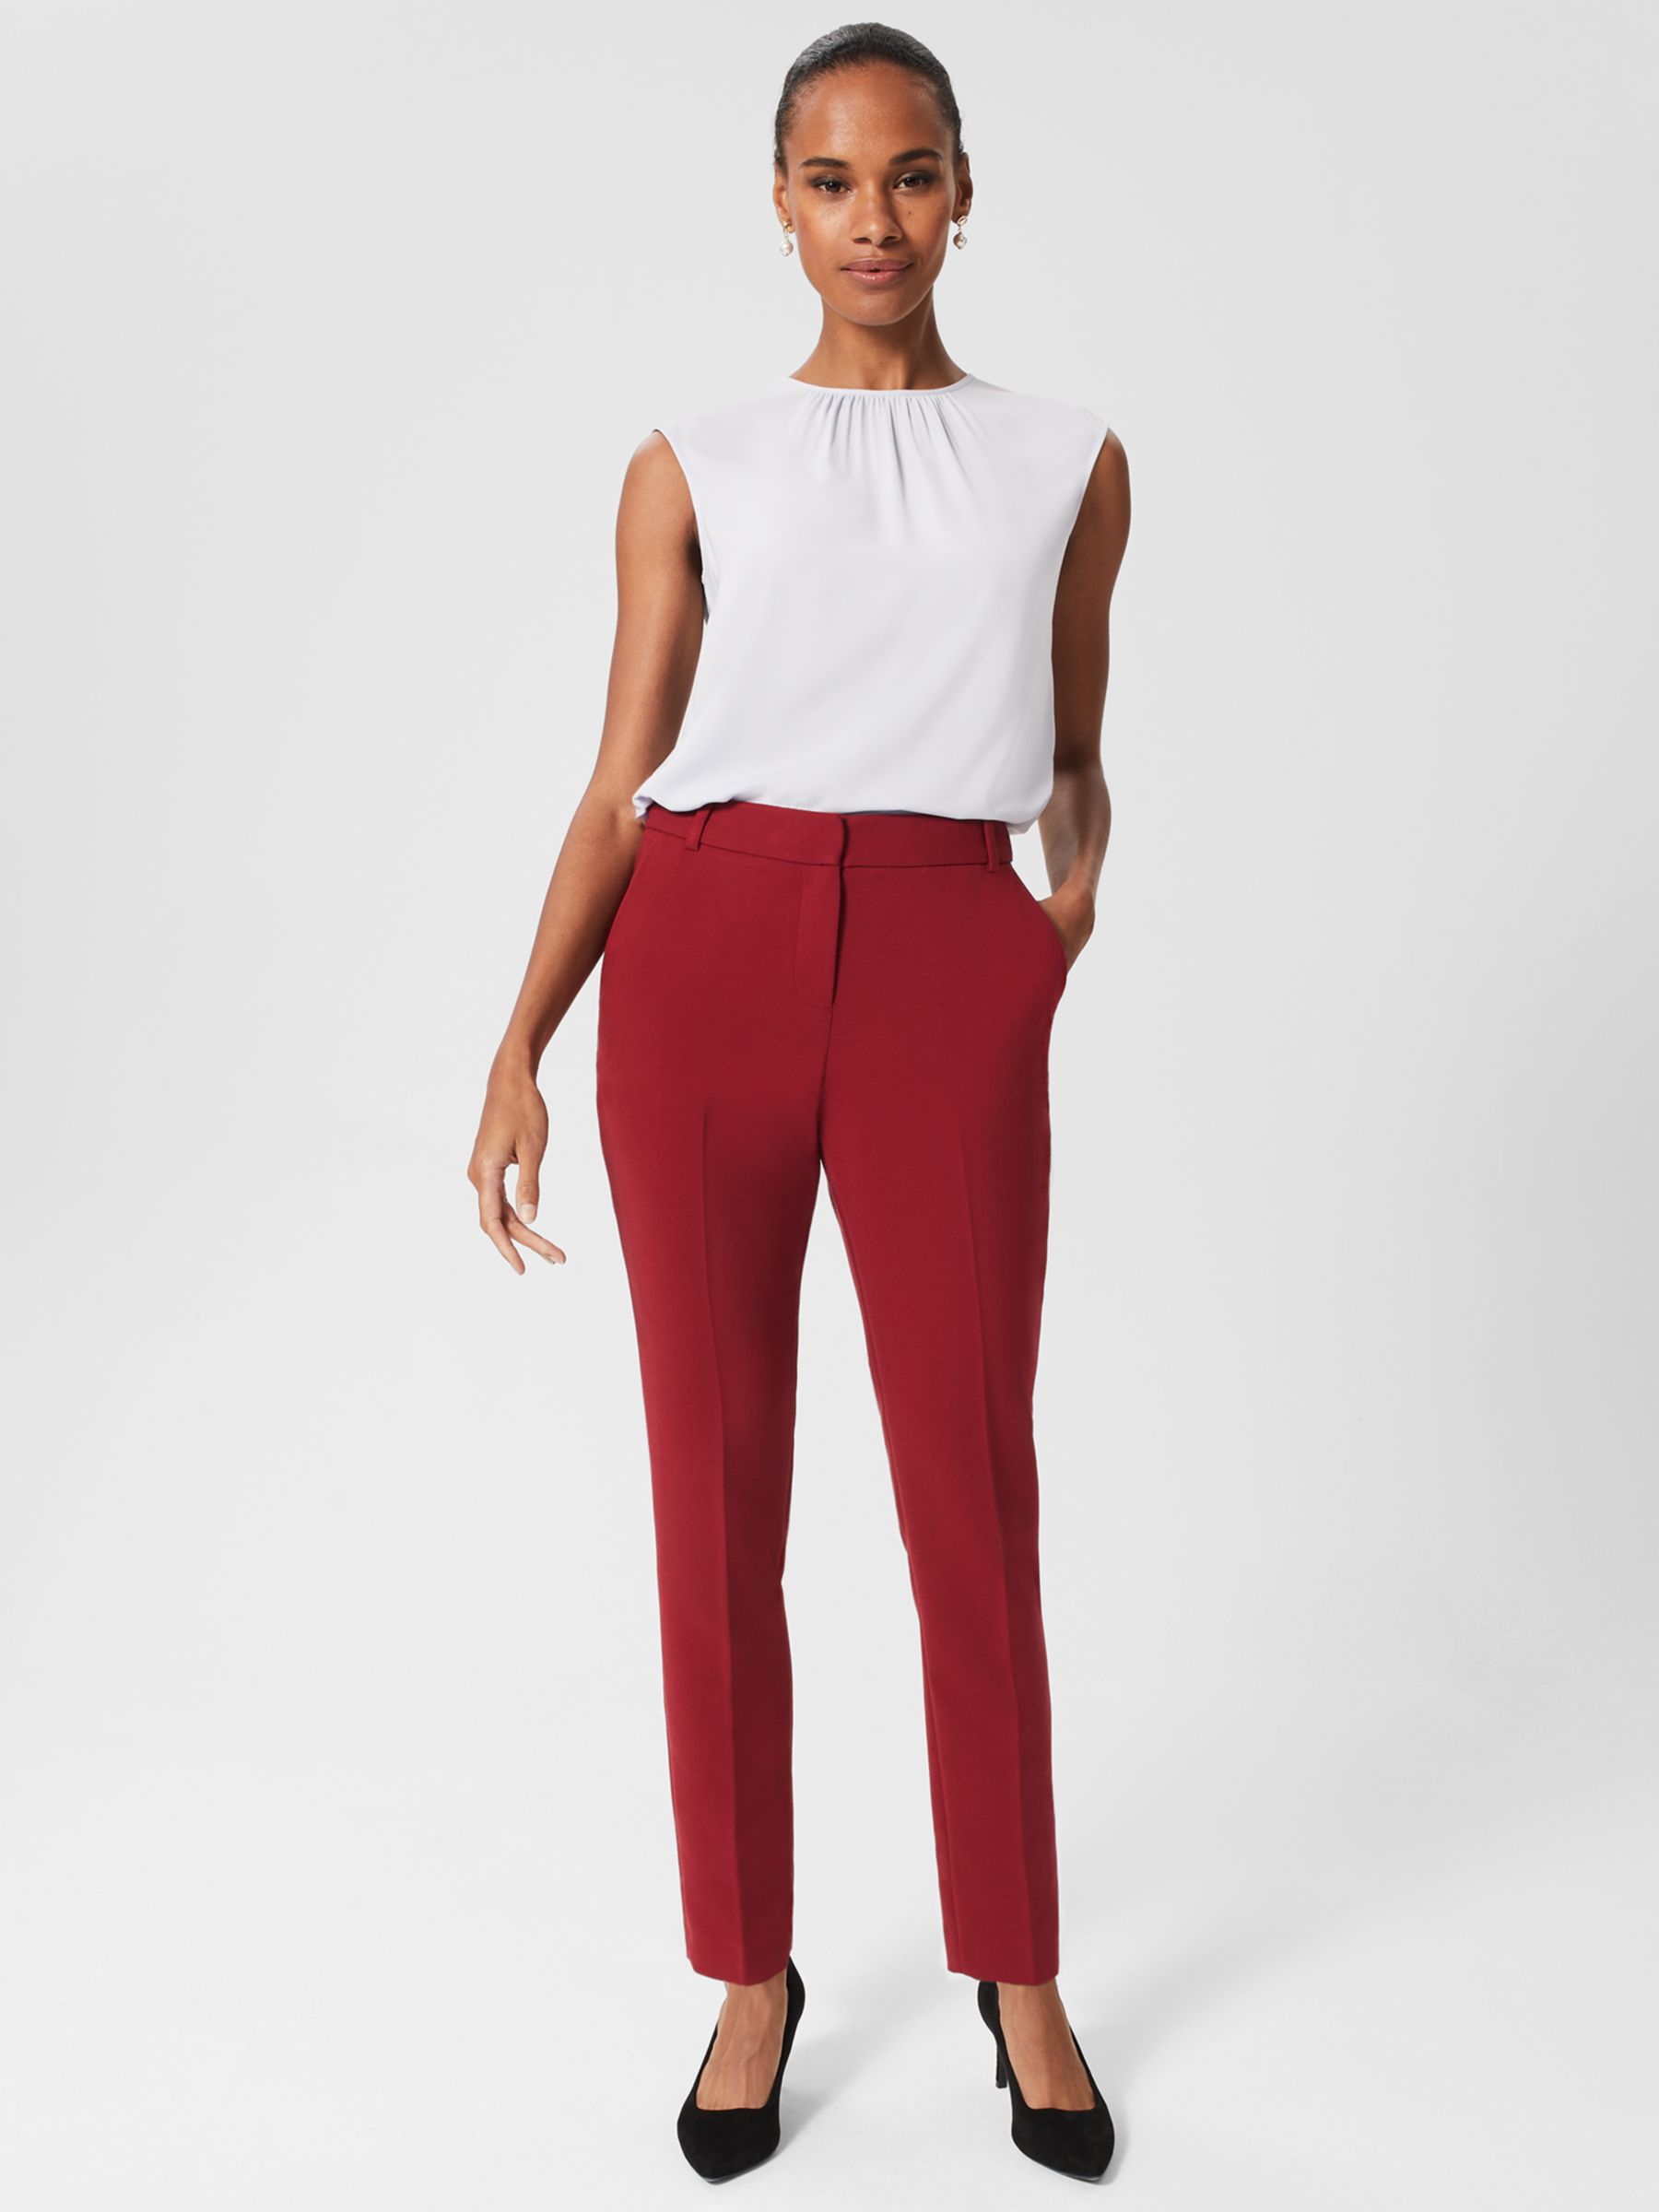 Hobbs Suki Tailored Trousers, Rhubarb Red at John Lewis & Partners